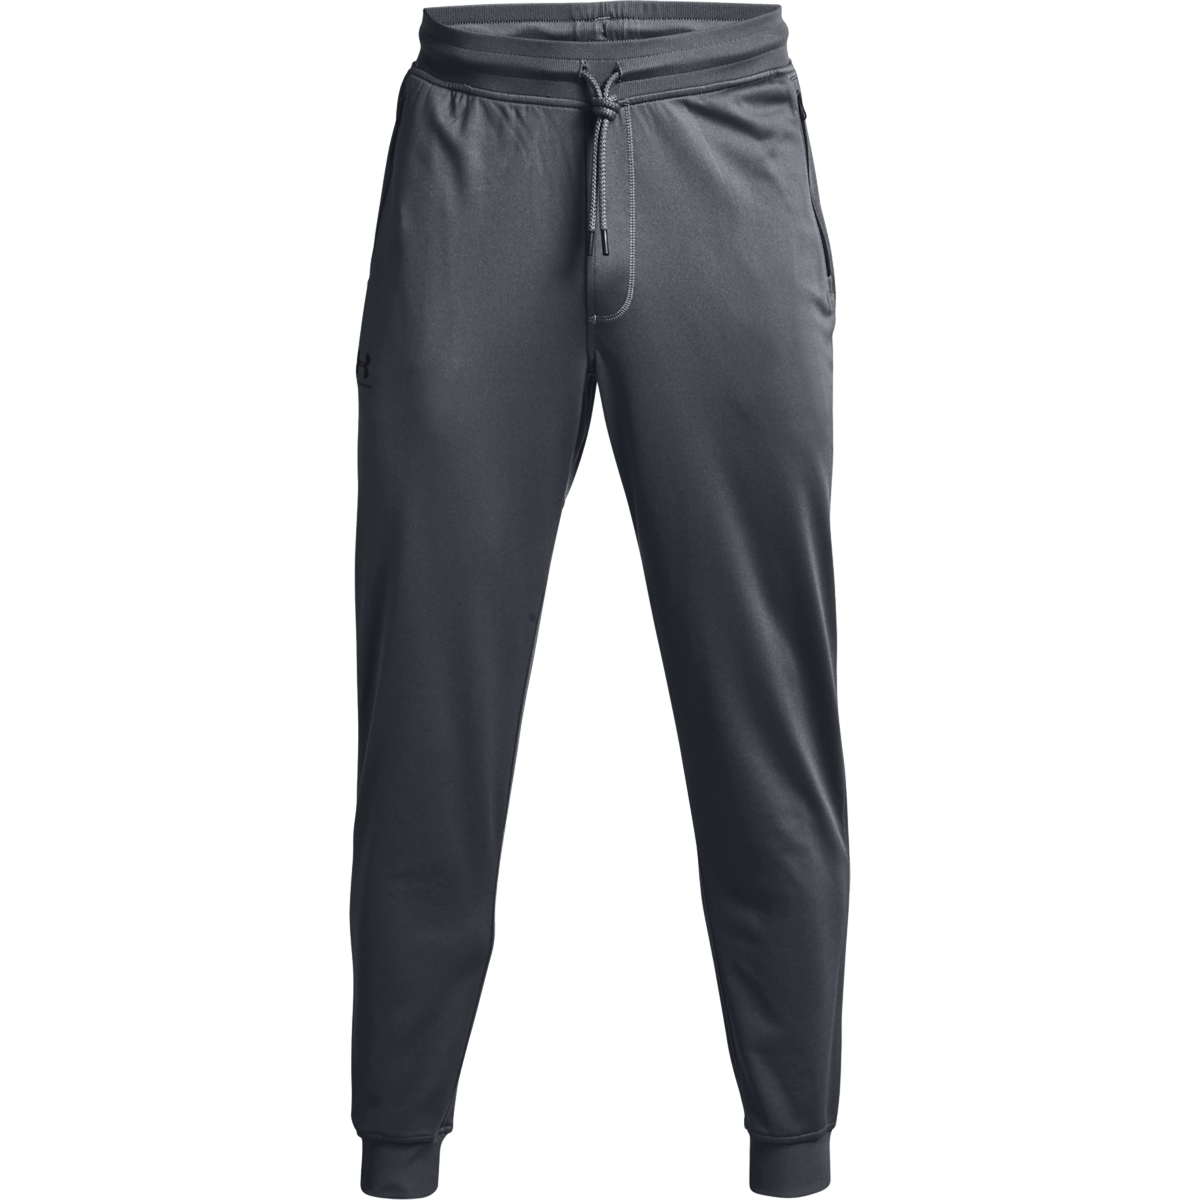 Men's Joggers Draw String Sports Sweat Pants, Reflective Zipper Pockets